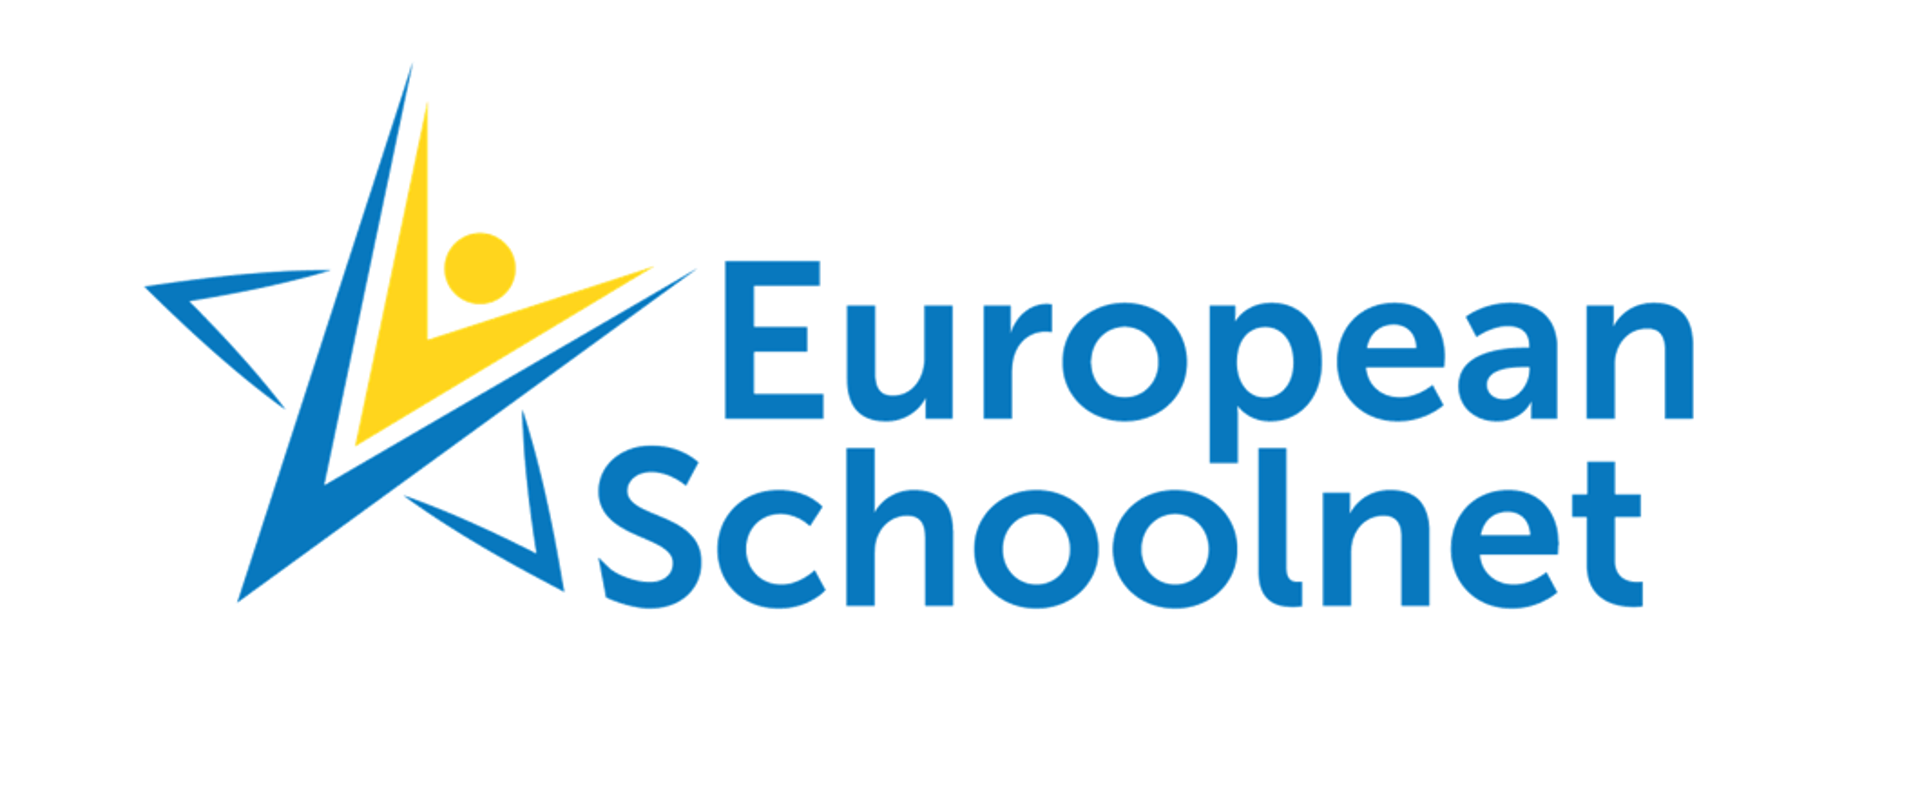 Grafika z napisem European Schoolnet 